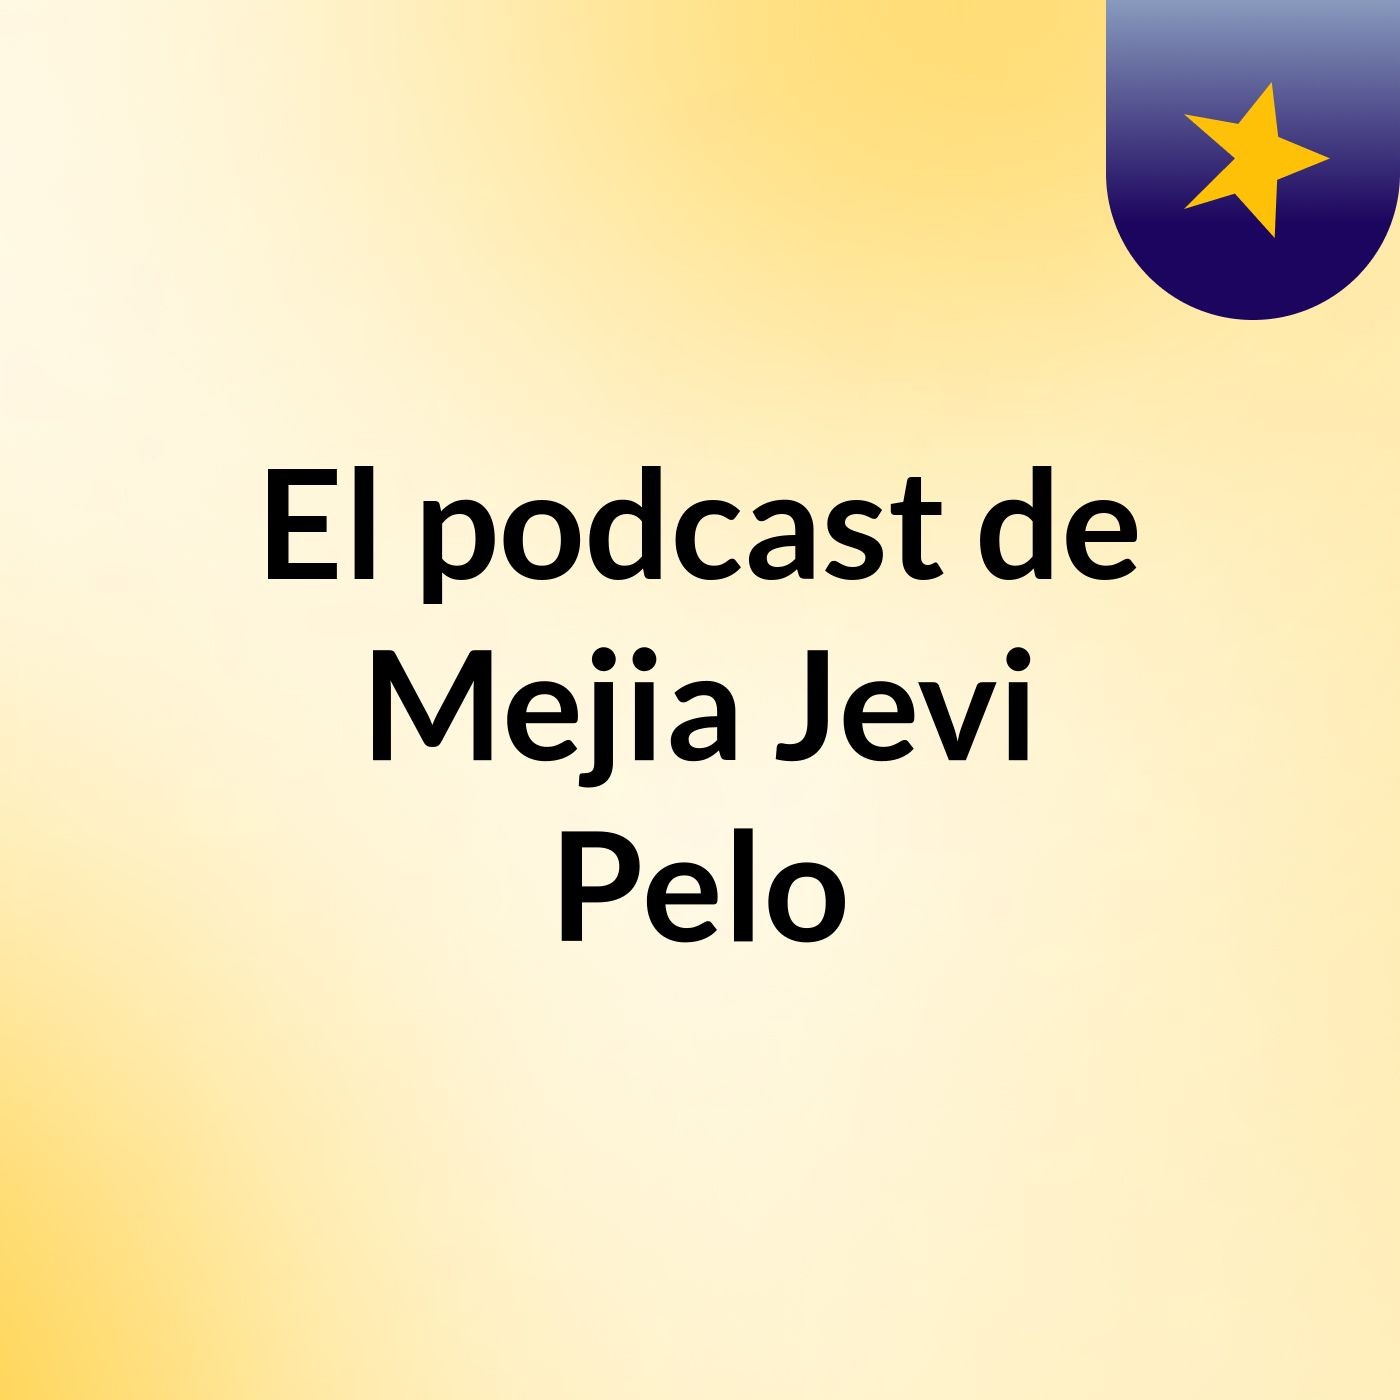 Episodio 5 - El podcast de Mejia Jevi Pelo